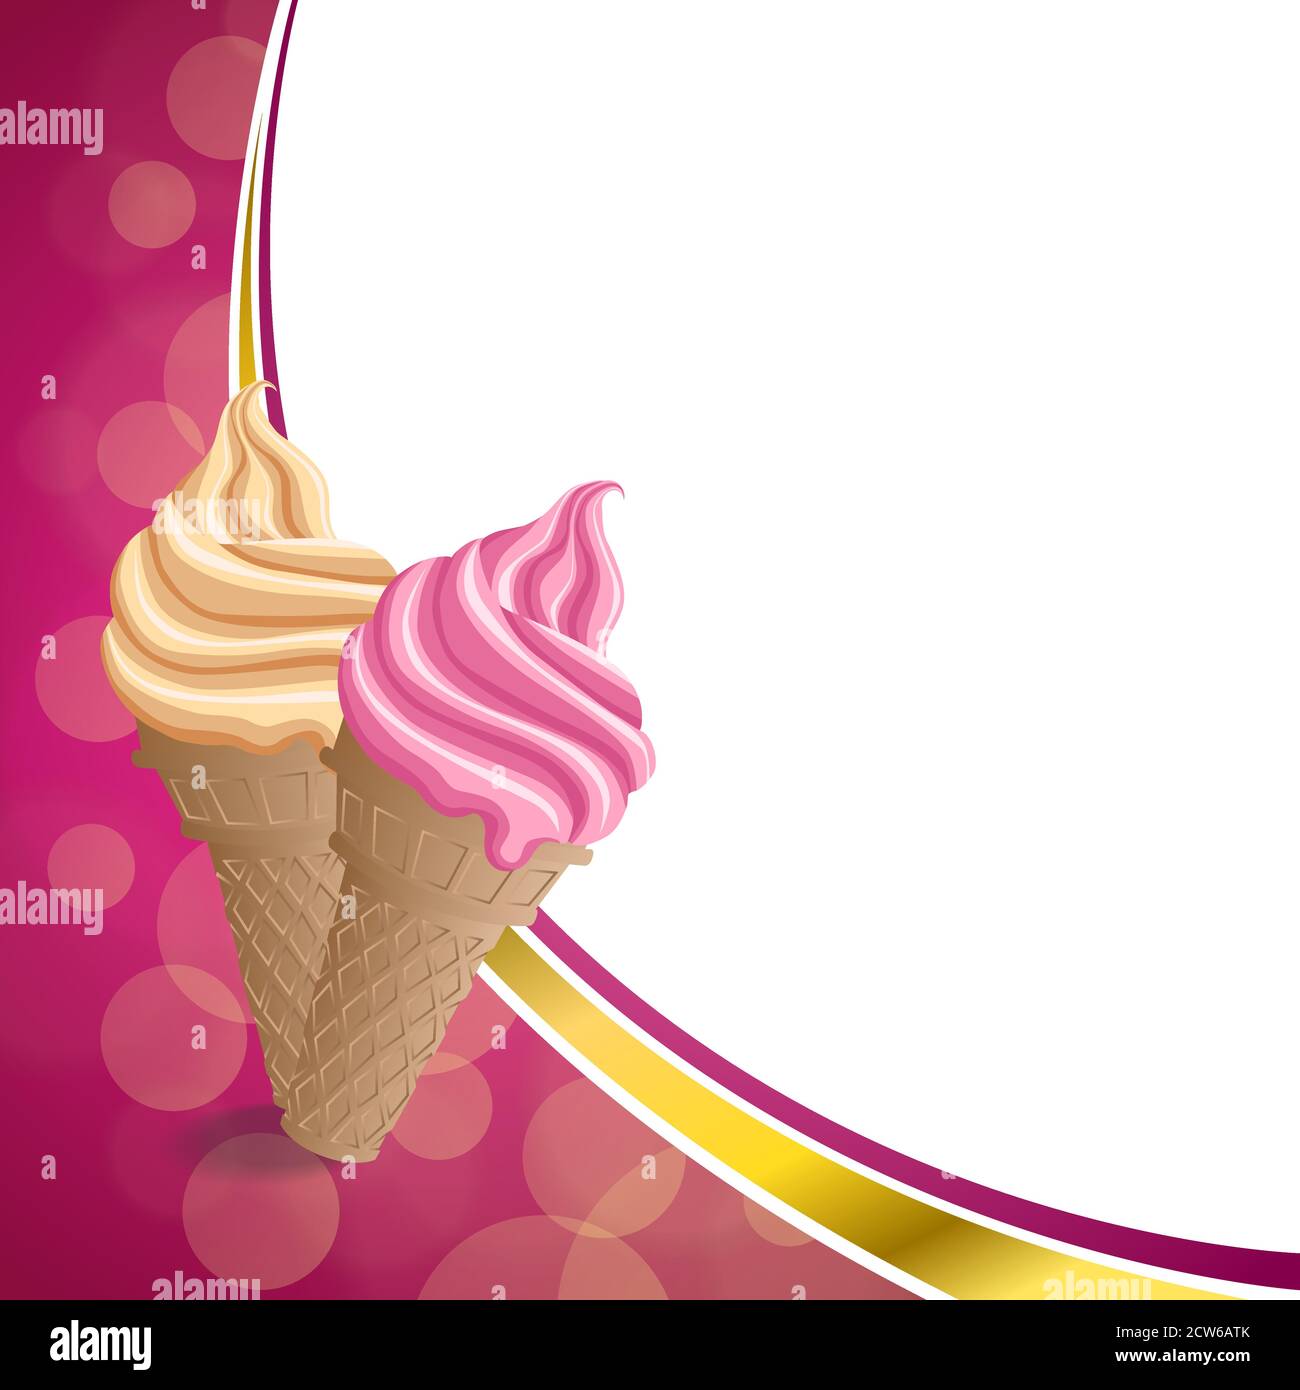 Background abstract pink beige vanilla ice cream illustration gold ribbon frame illustration vector Stock Vector